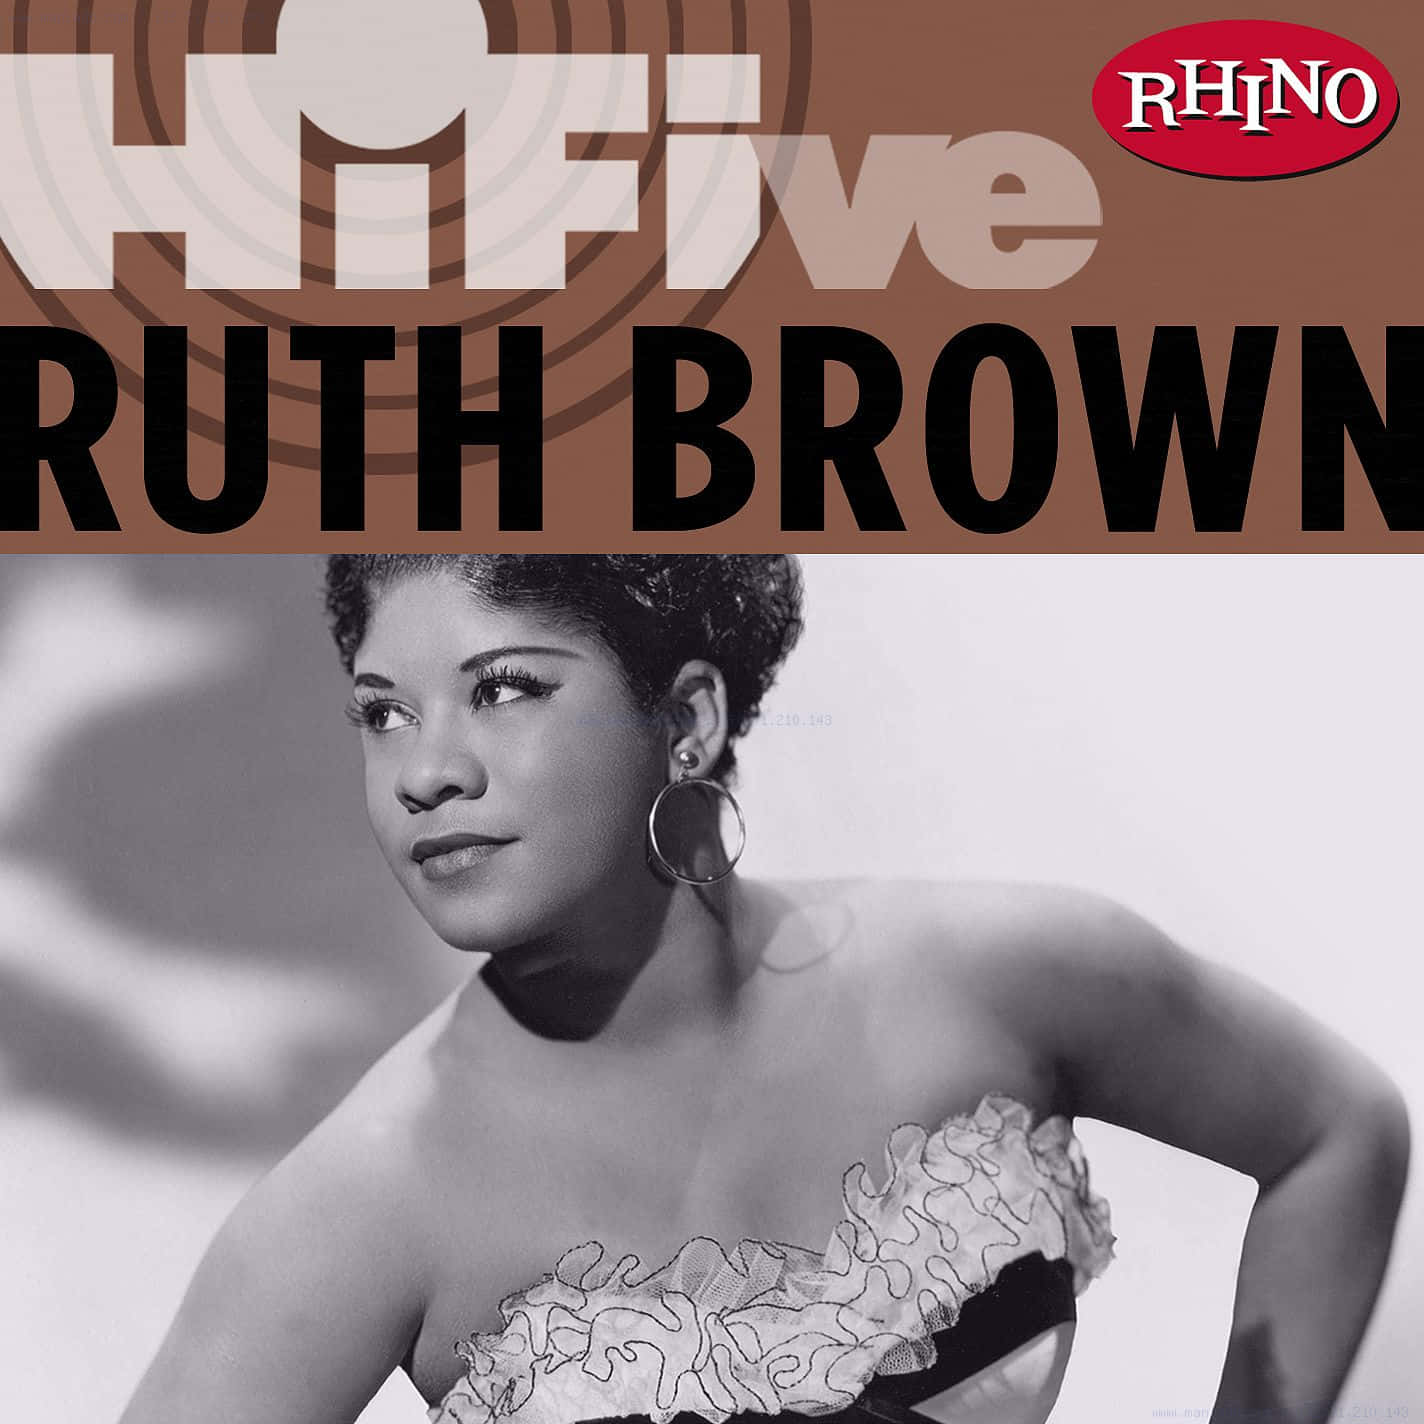 Ruth Brown in the Rhino Hi-Five Album Cover Wallpaper